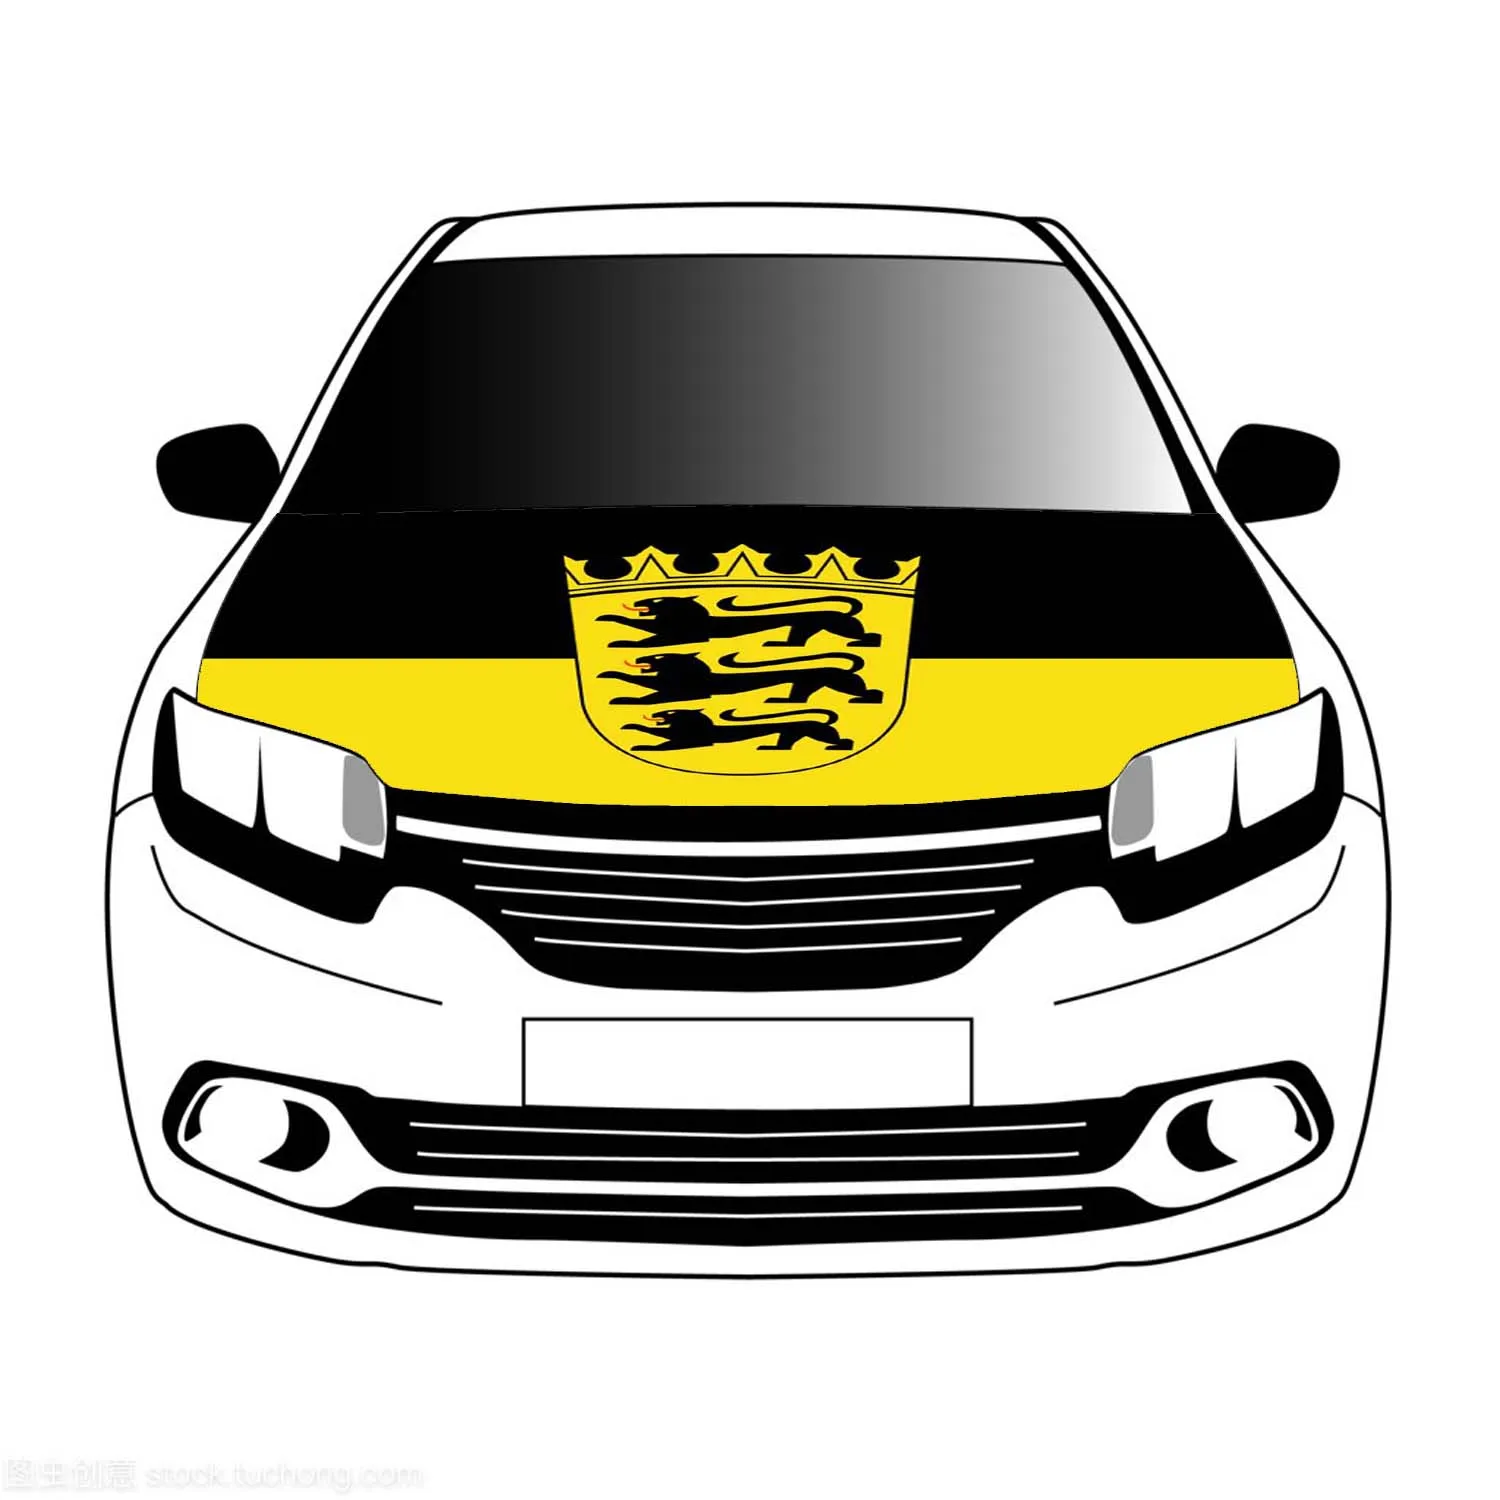 Баден Вюртемберг, флаг накладка на капот автомобиля 3x5 футов, 100% полиэстер, баннер для капота автомобиля